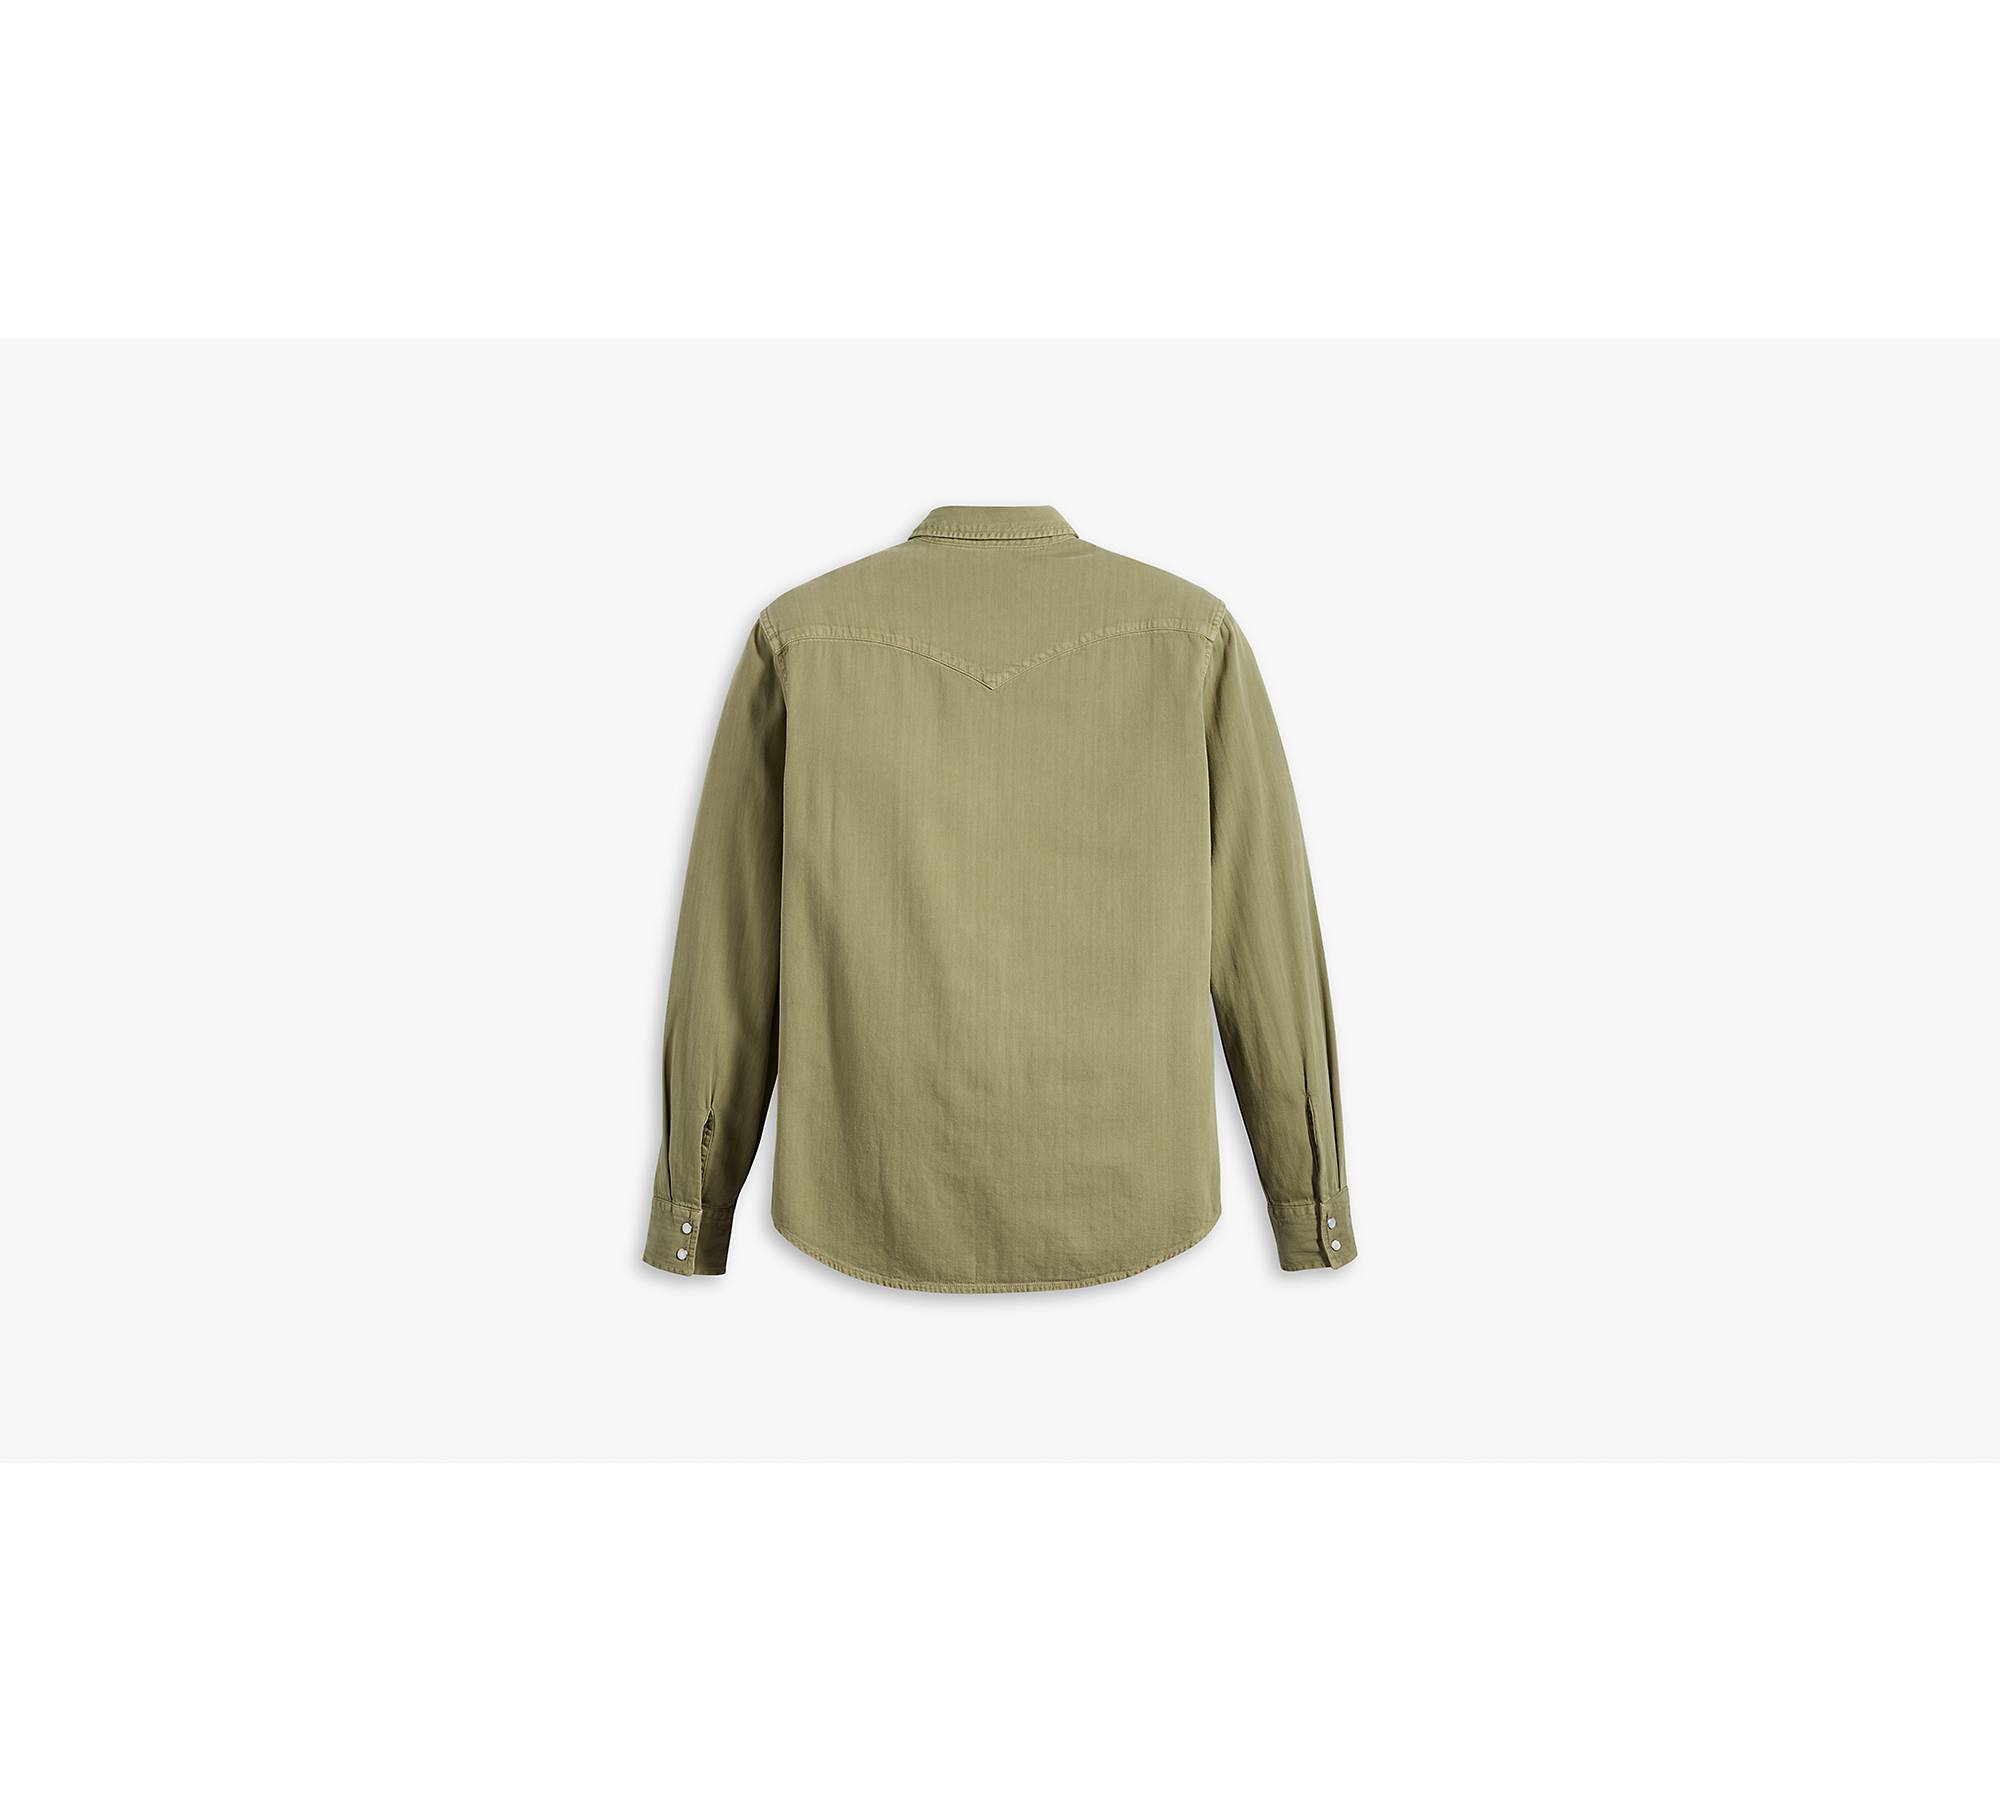 Buy LEVIS Green Solid Cotton Linen Blend Mens Shirt